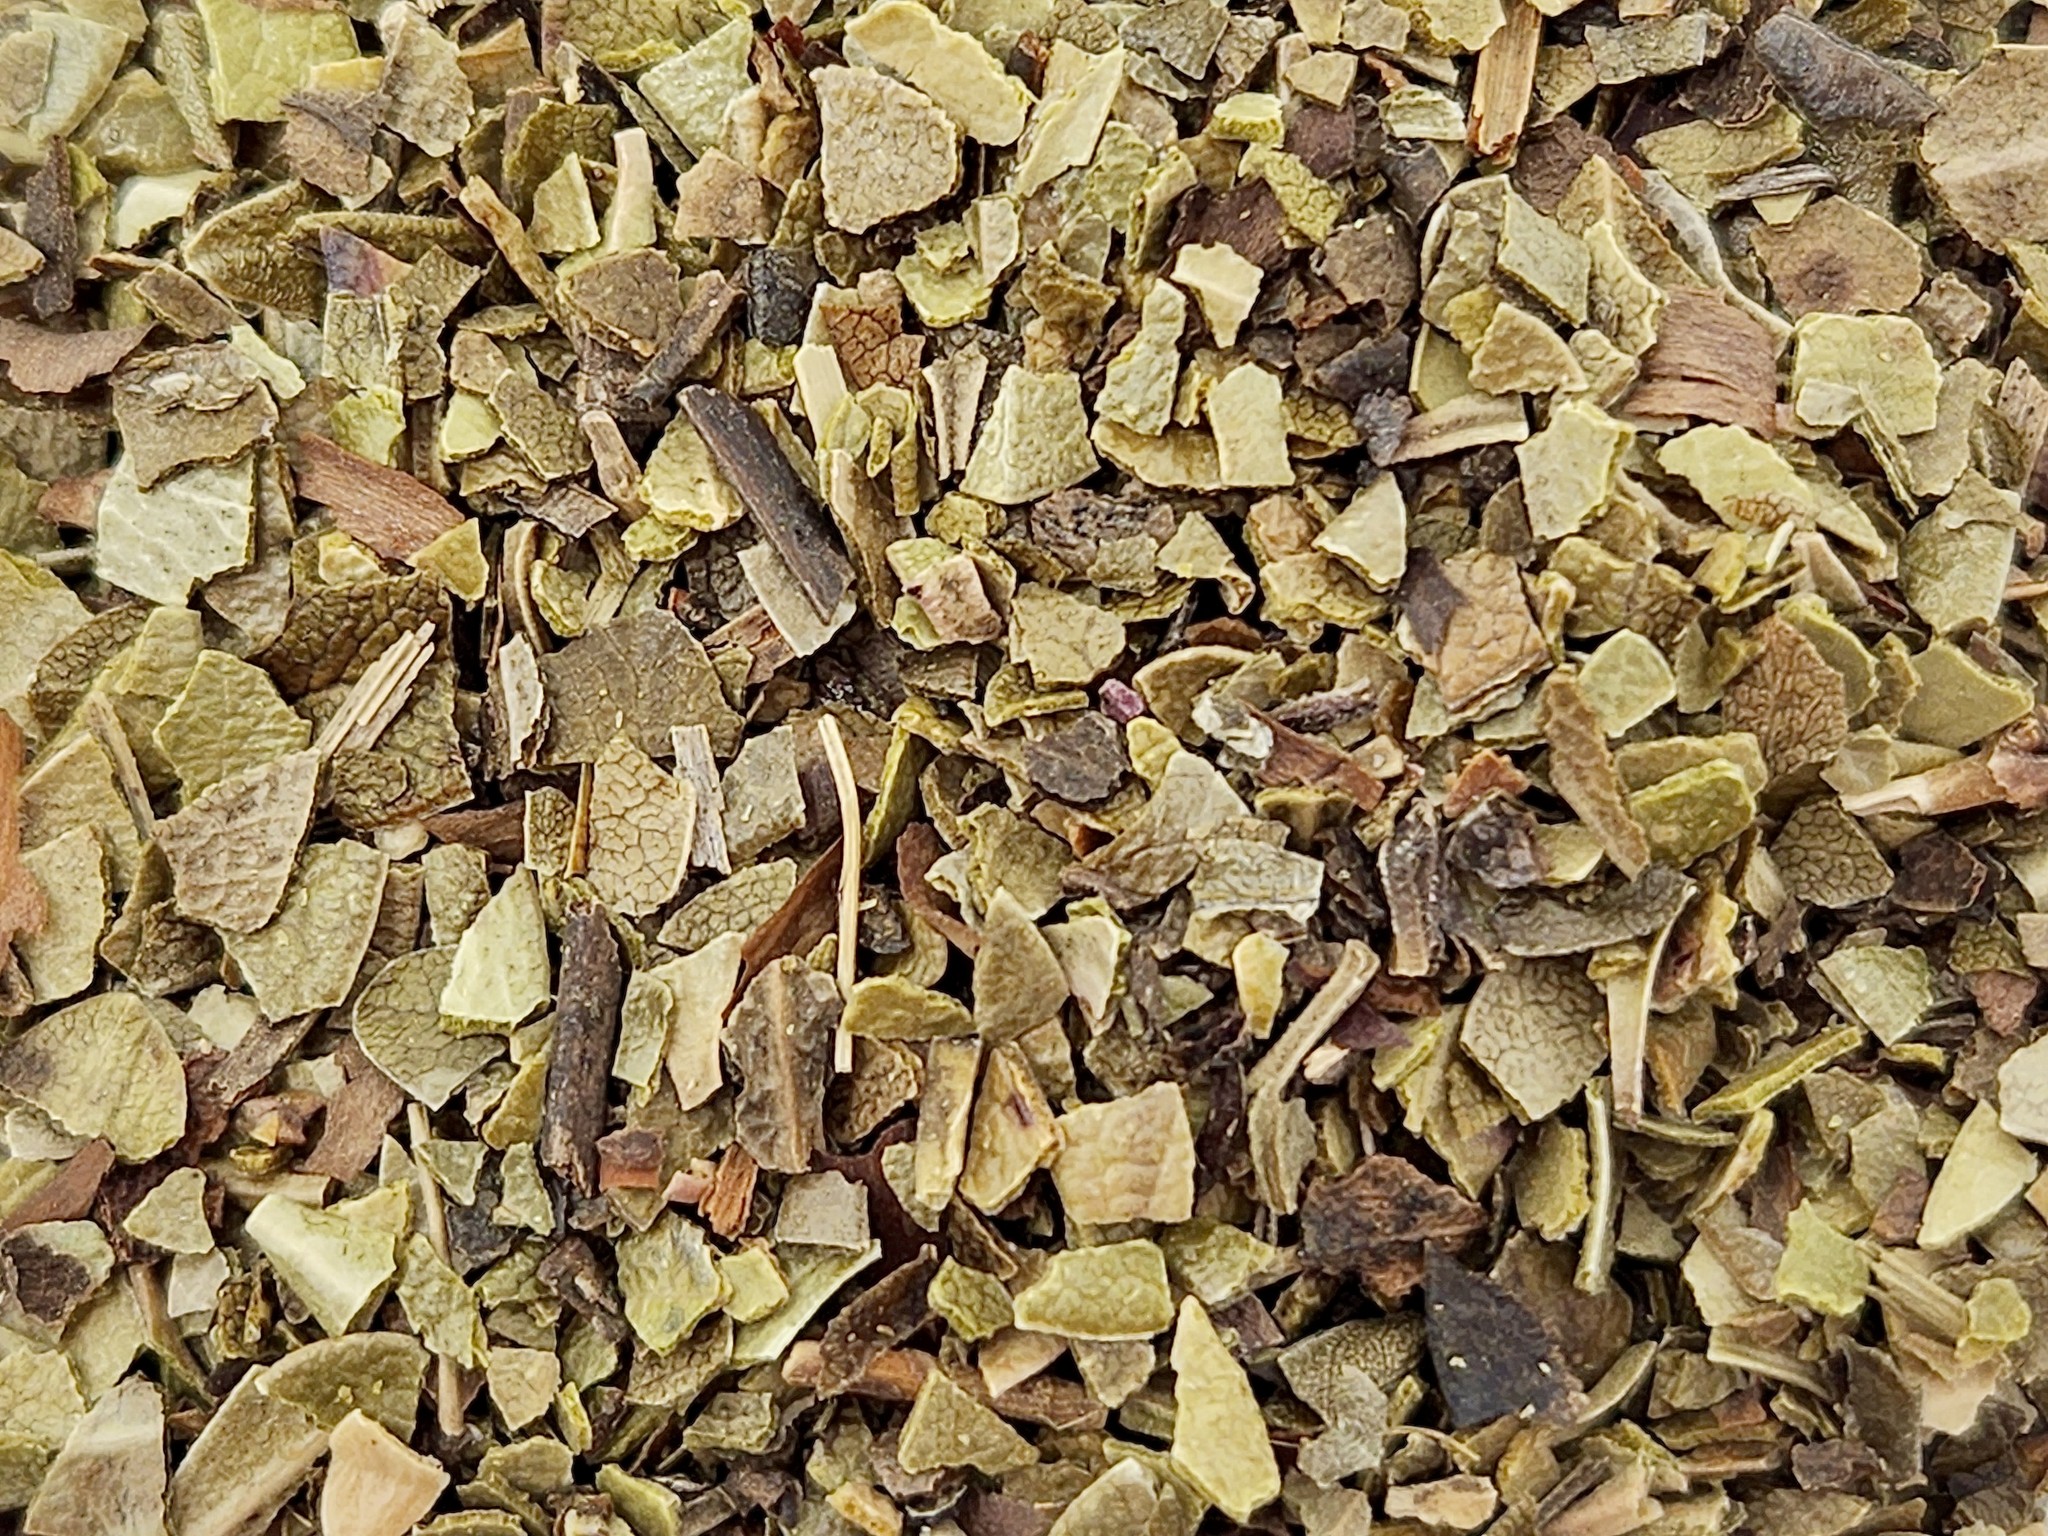 Uva Ursi Leaf Cut and Sifted Bulk